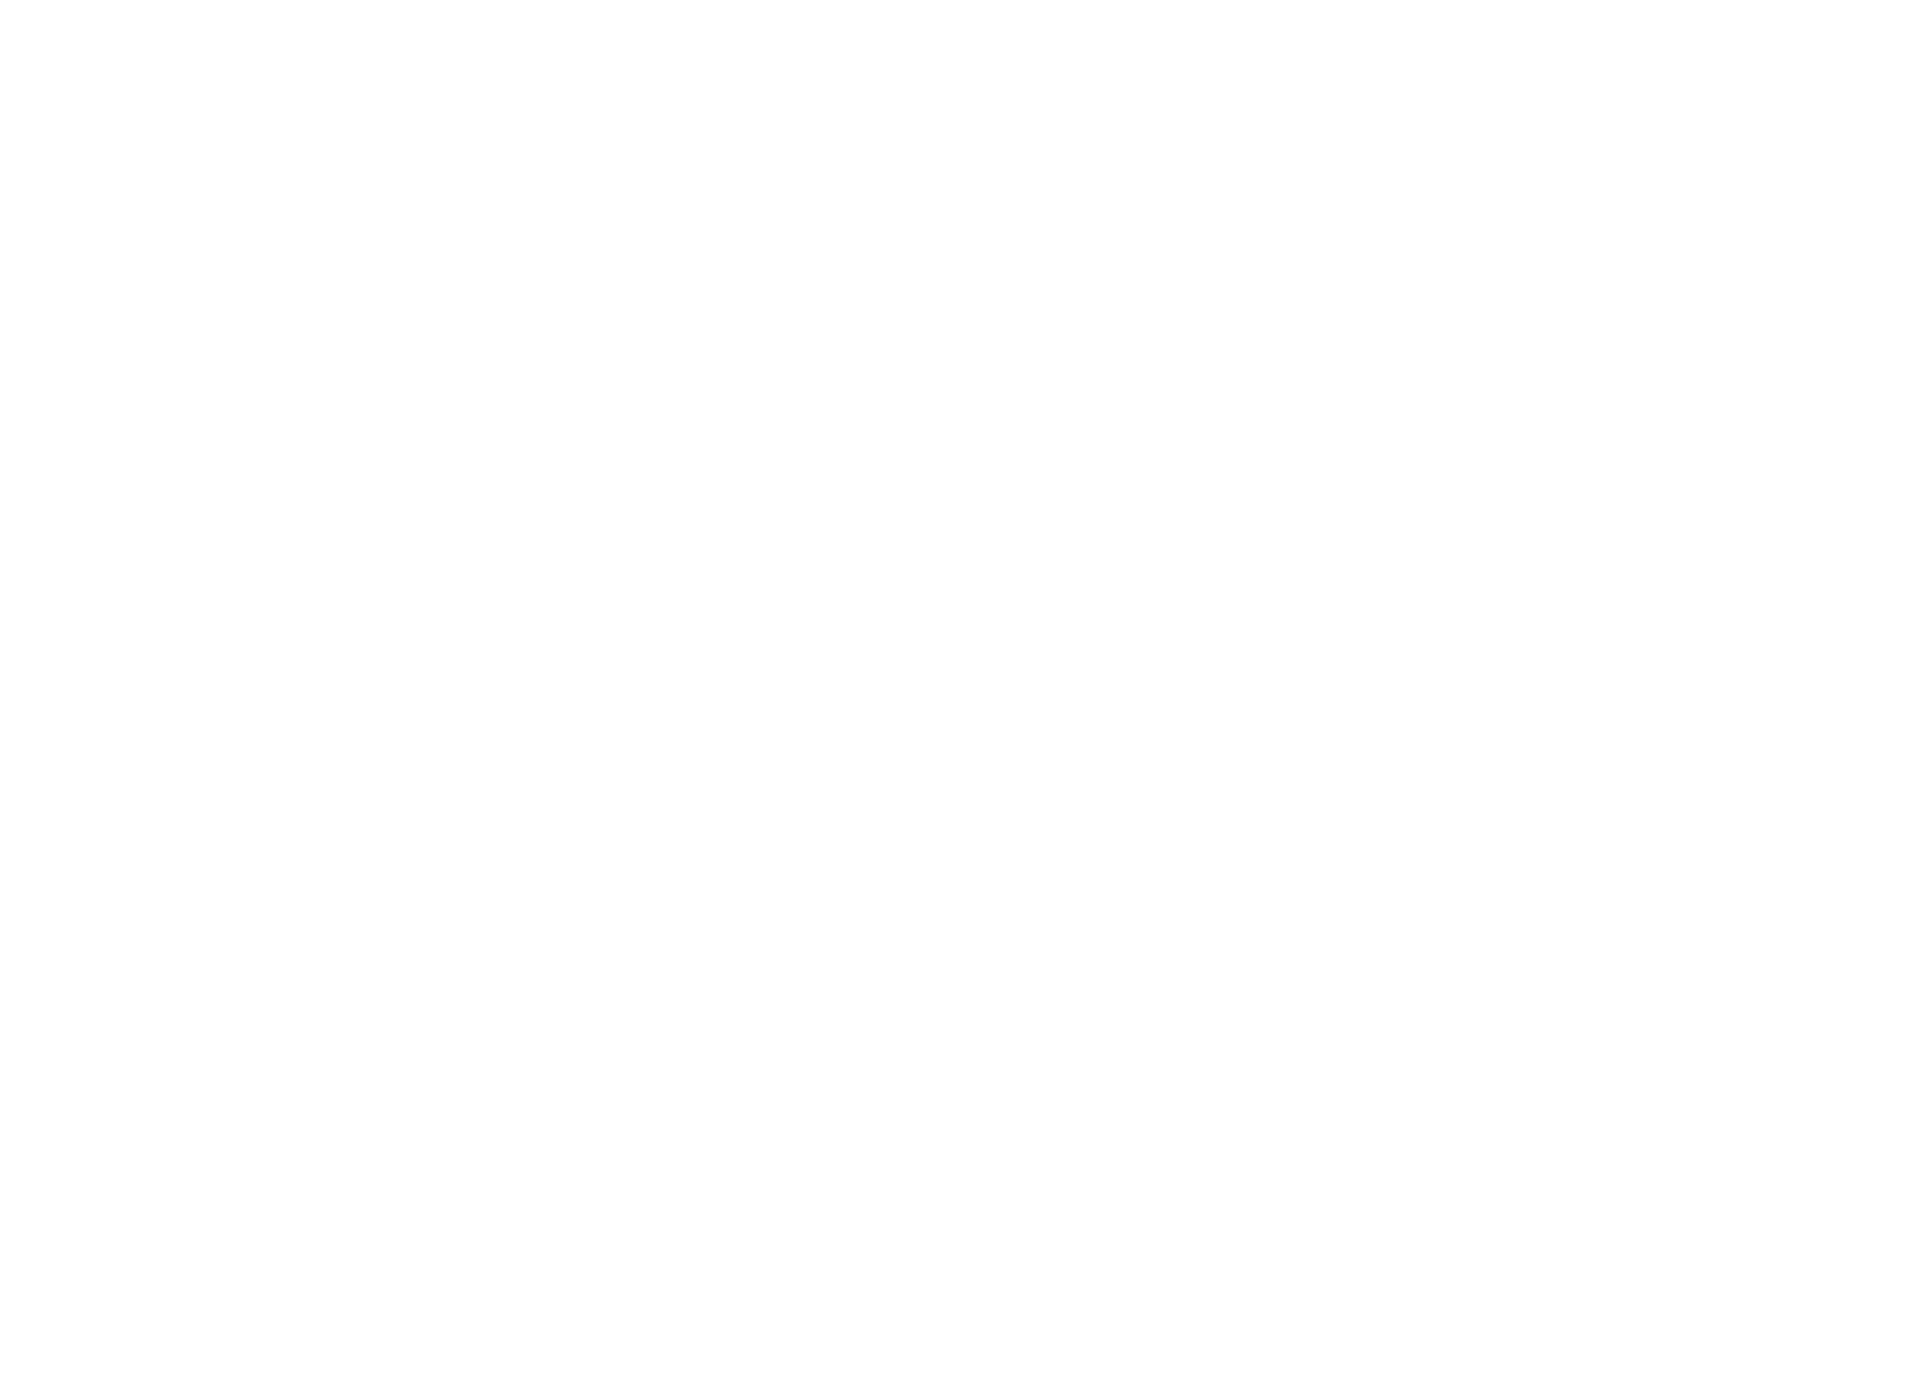 IRC Roofing San Antonio, Austin, Round Rock and Surrounding Areas